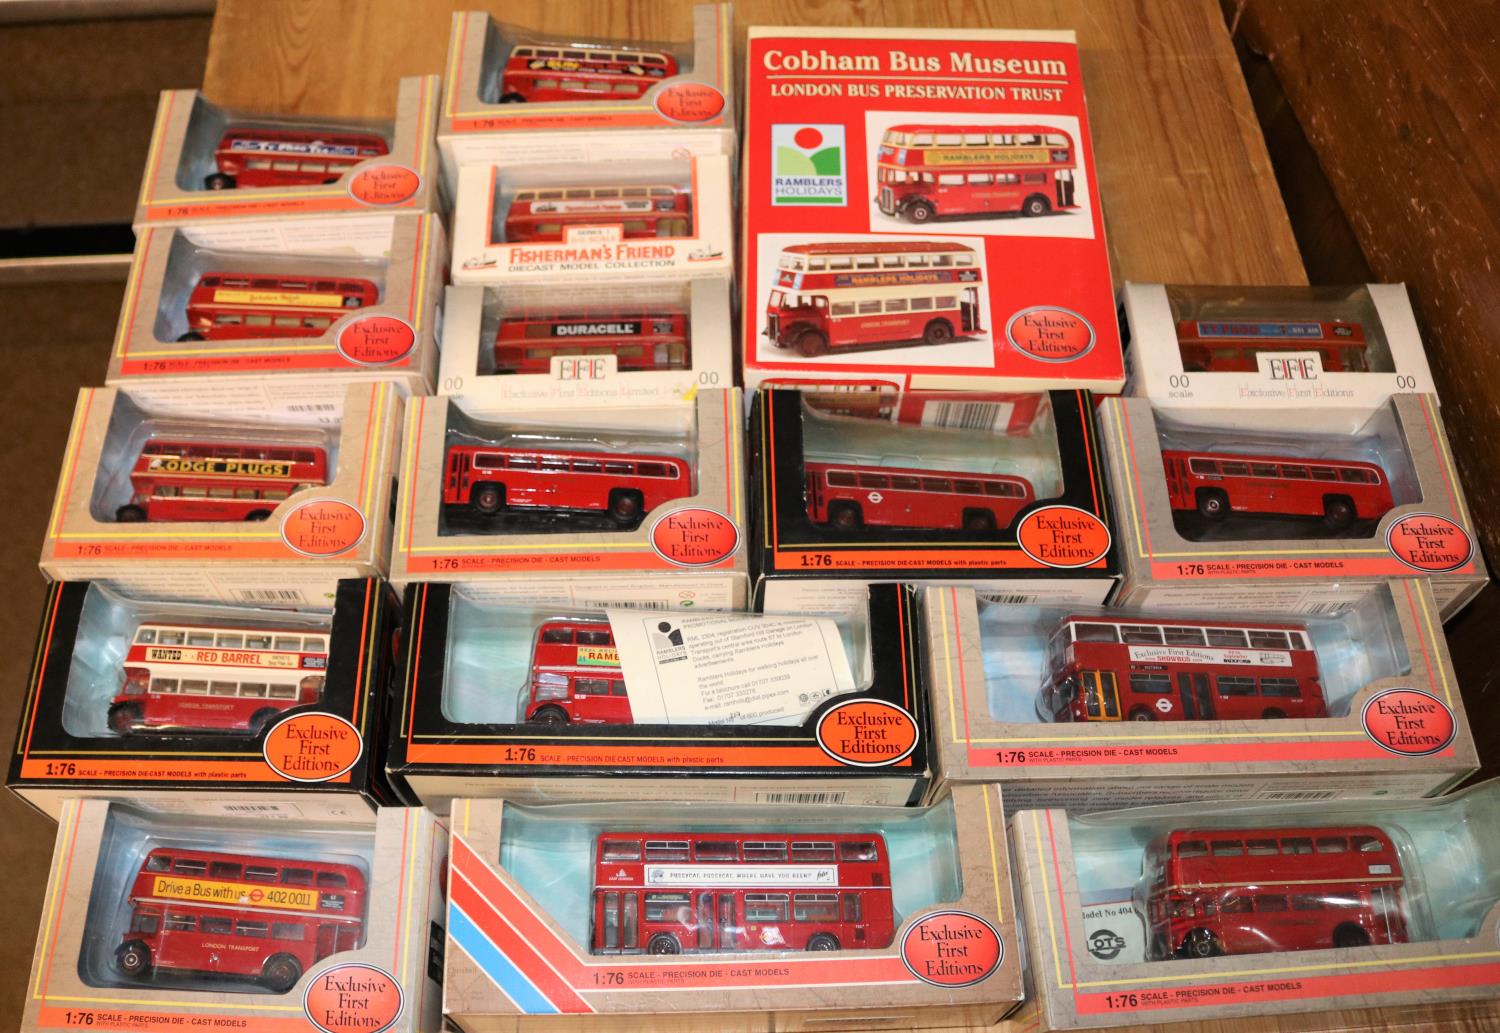 18 EFE Buses, all London Transport. Cobham Bus Museum London Bus Preservation Trust 2 vehicle set,